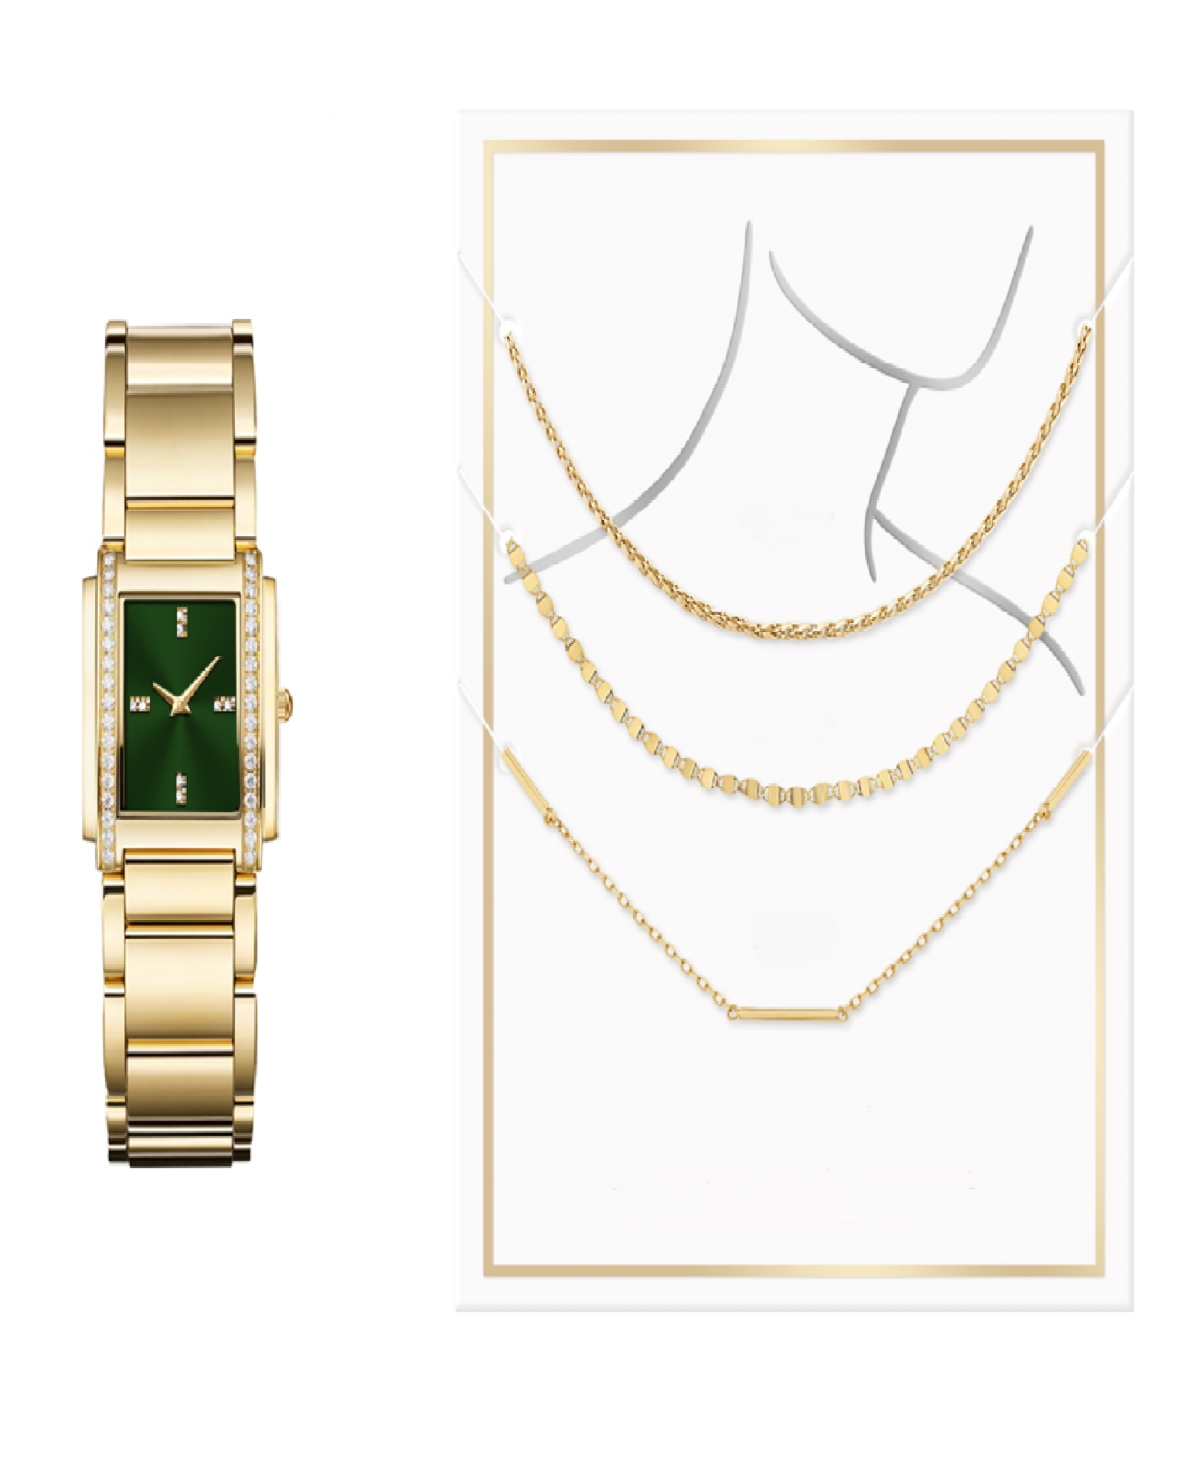 Women's Quartz Gold-Tone Alloy Watch 34mm Gift Set - Shiny Gold, Green Sunray